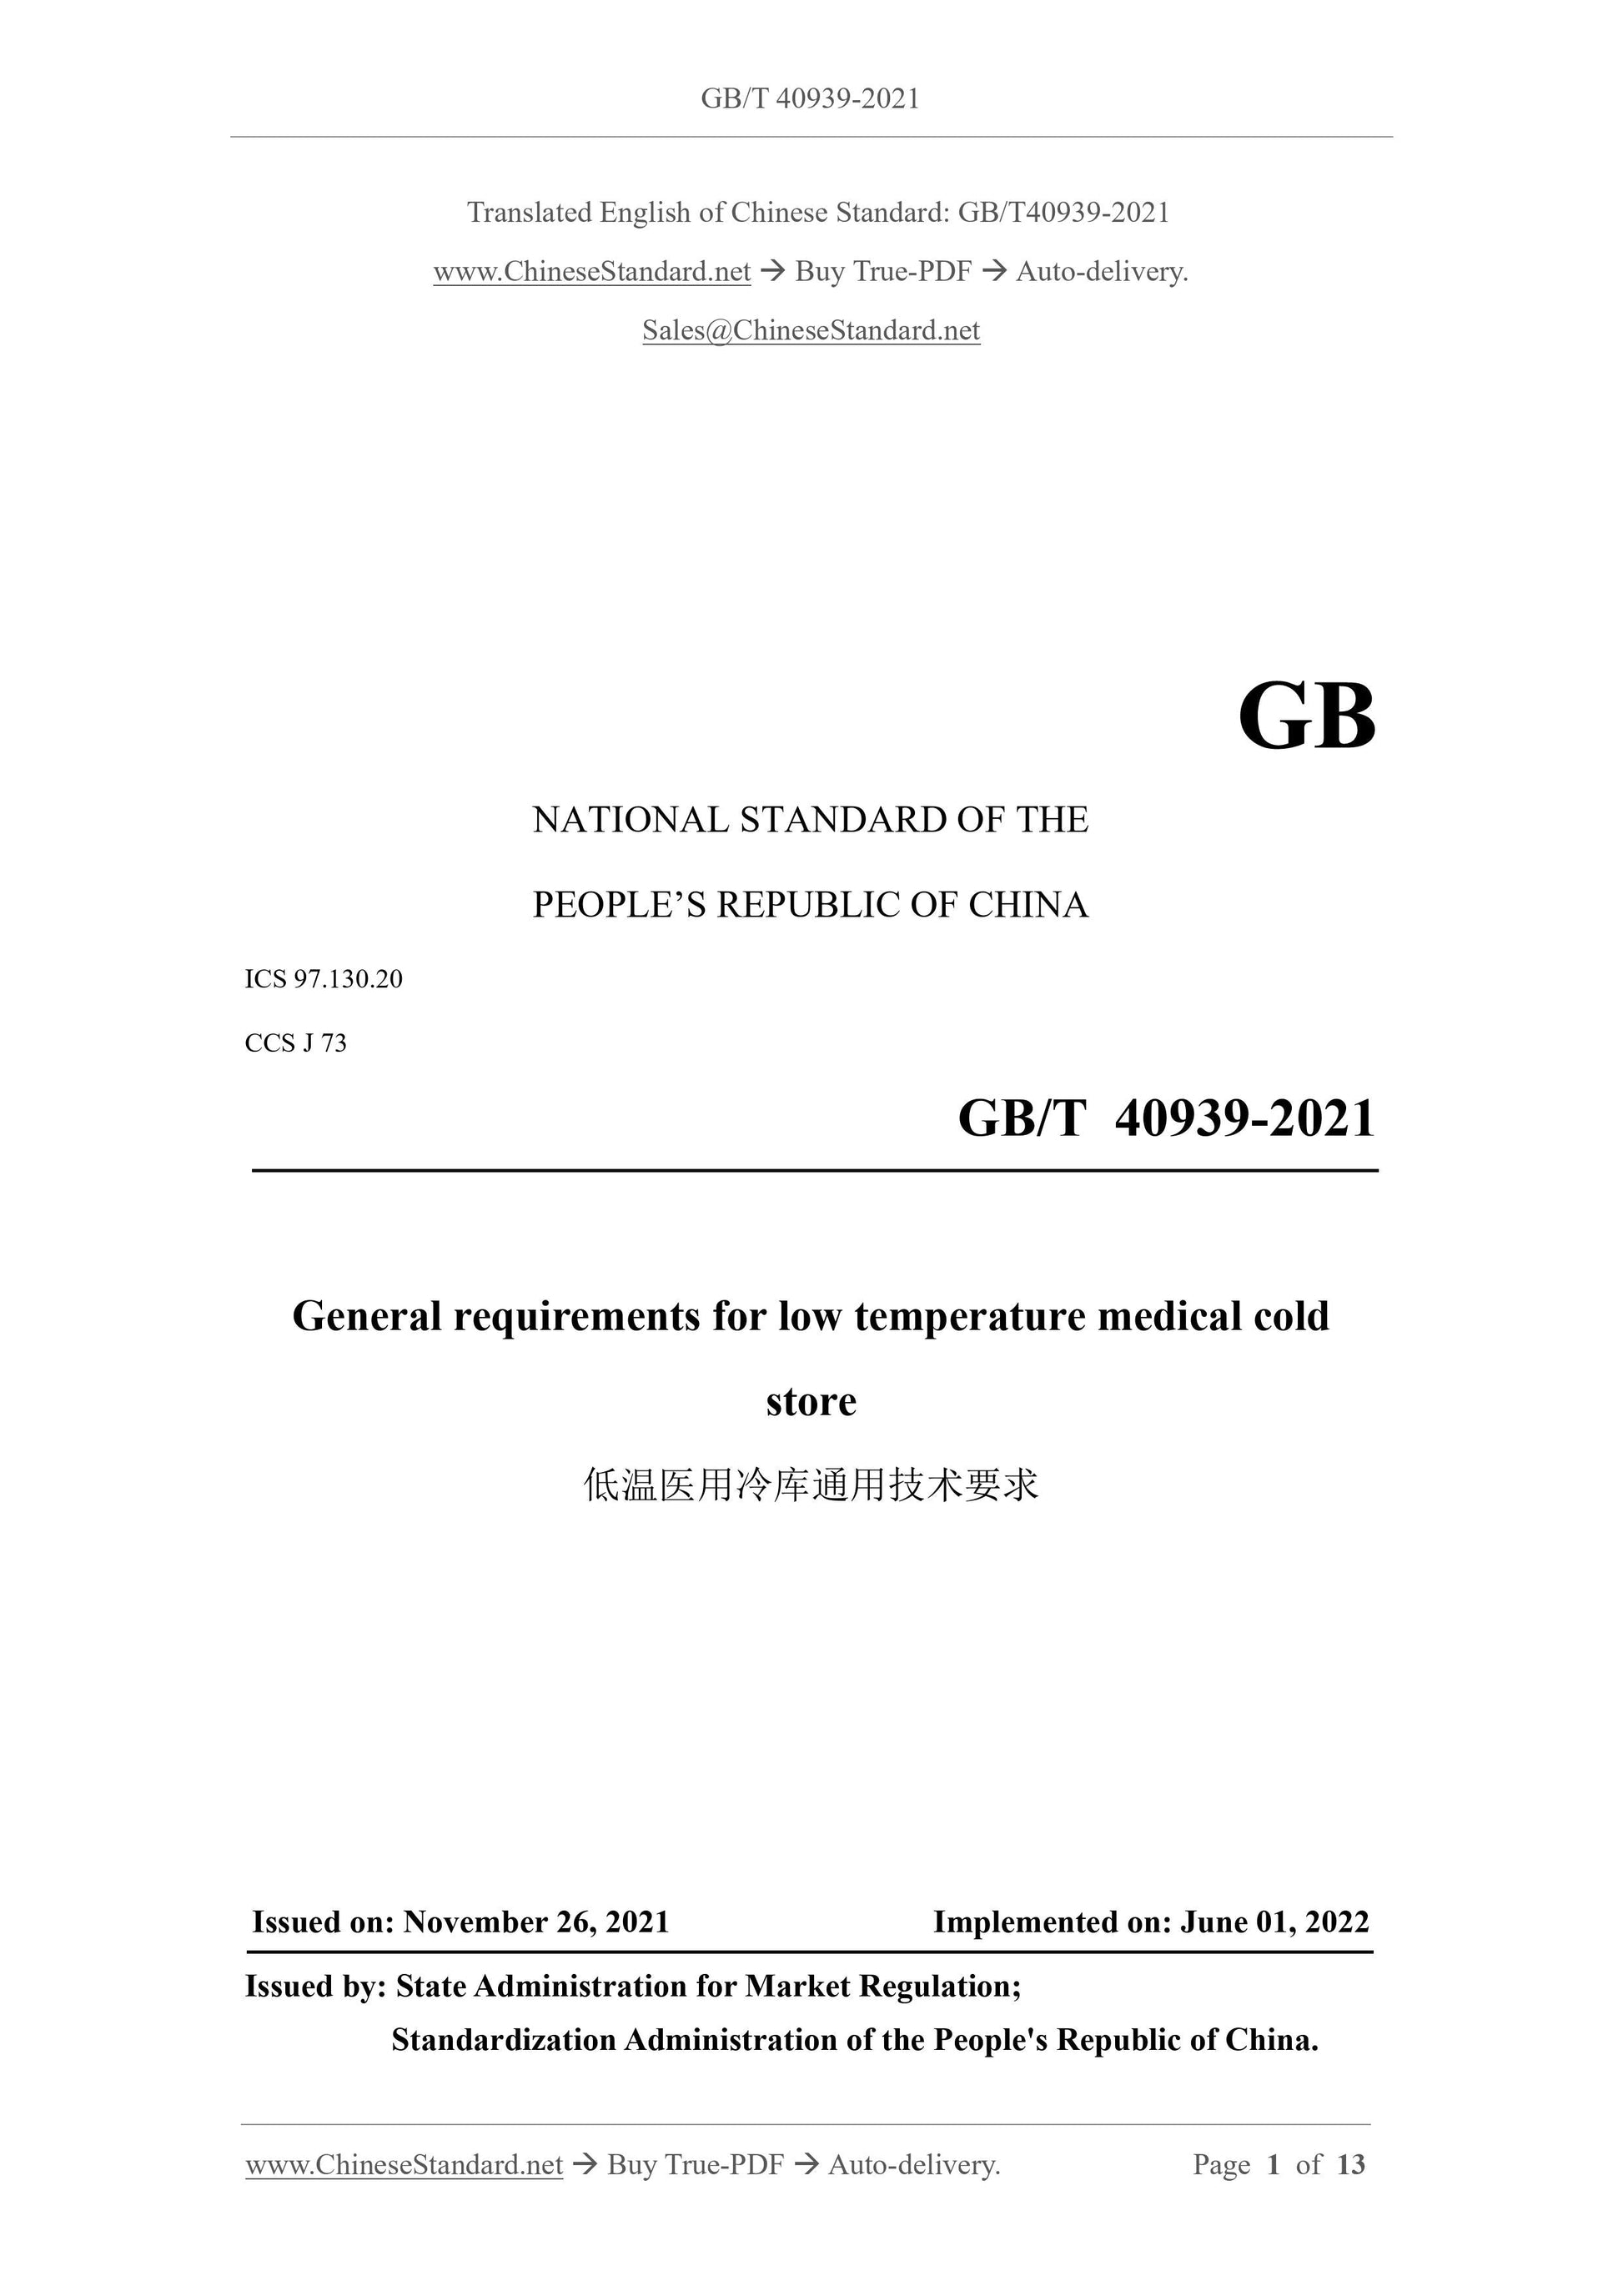 GBT40939-2021 Page 1